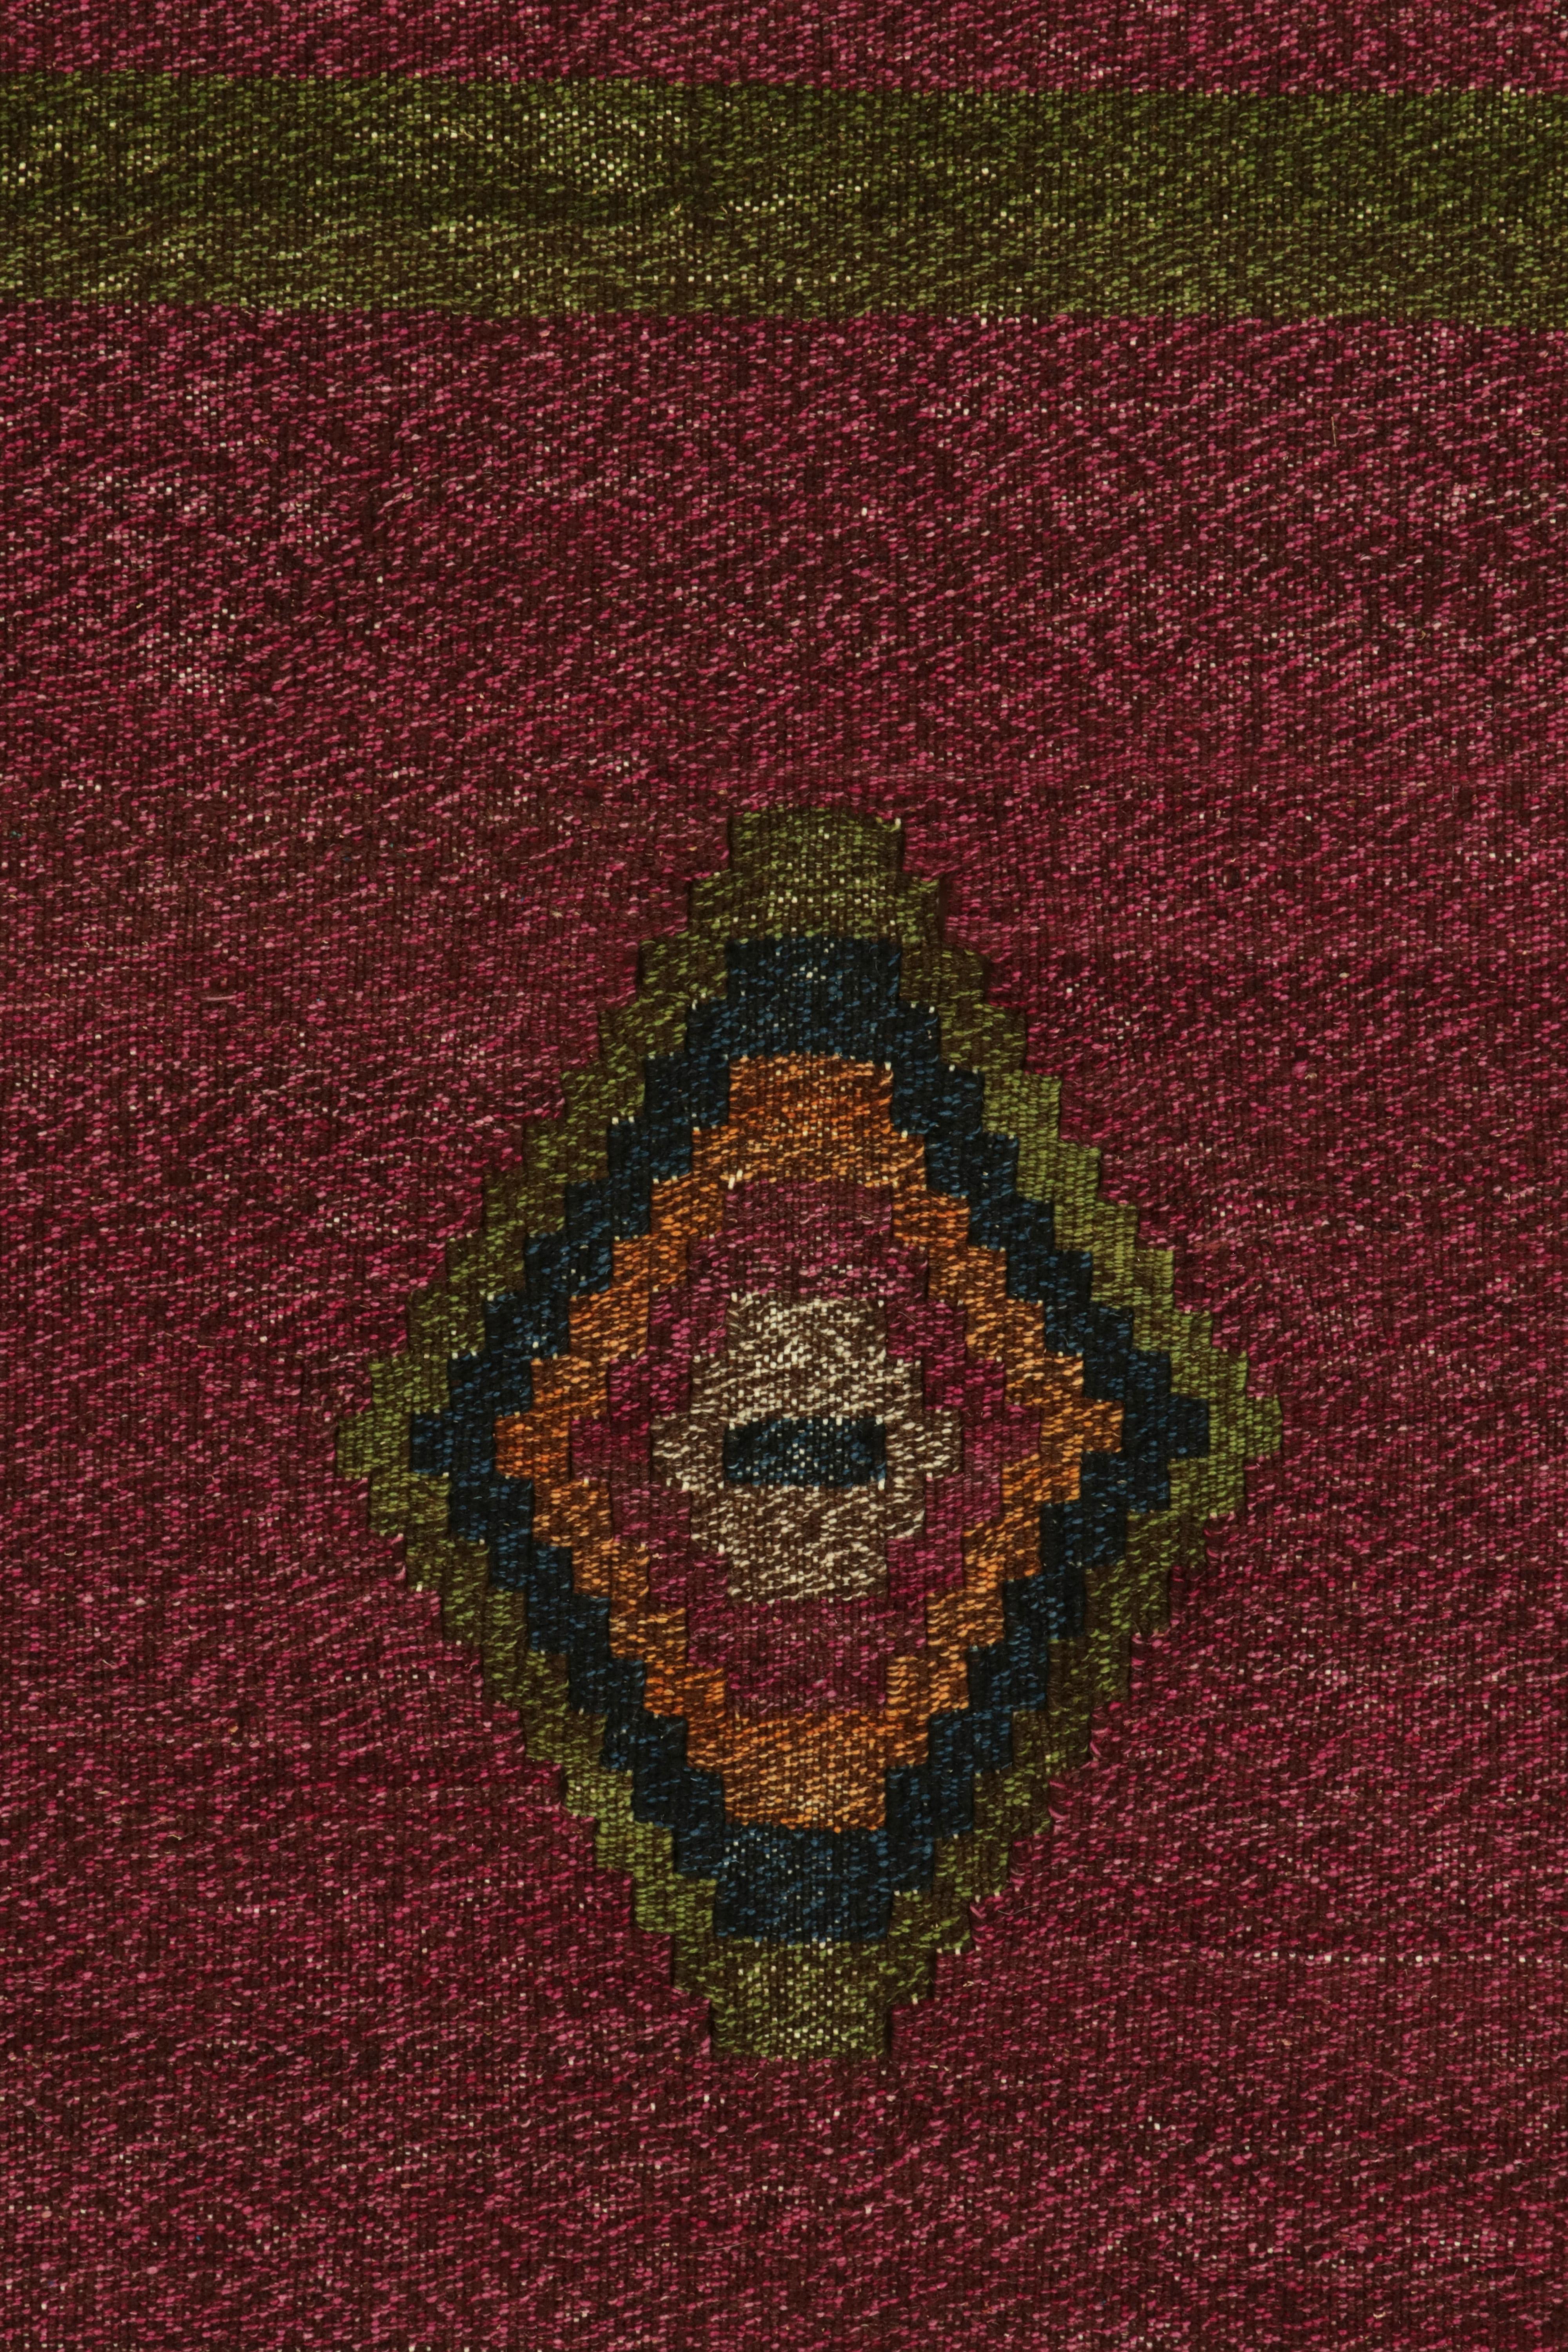 Persian 1950s Vintage Kilim Rug in Bordeaux Background Medallion Pattern by Rug & Kilim For Sale